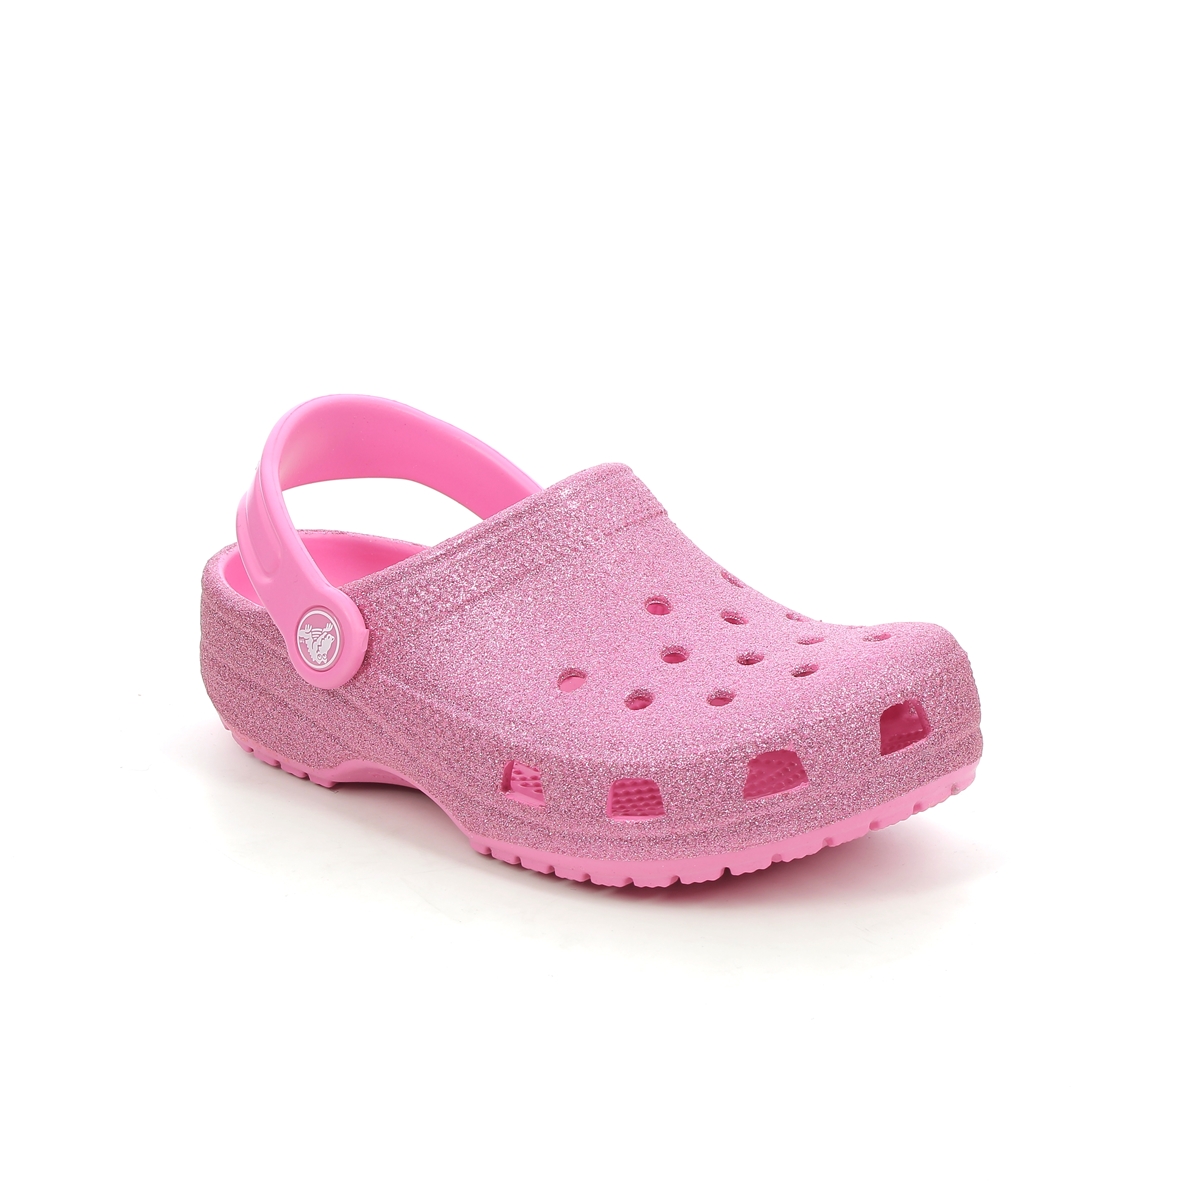 Crocs Junior/Toddler Mary Jane Clog 